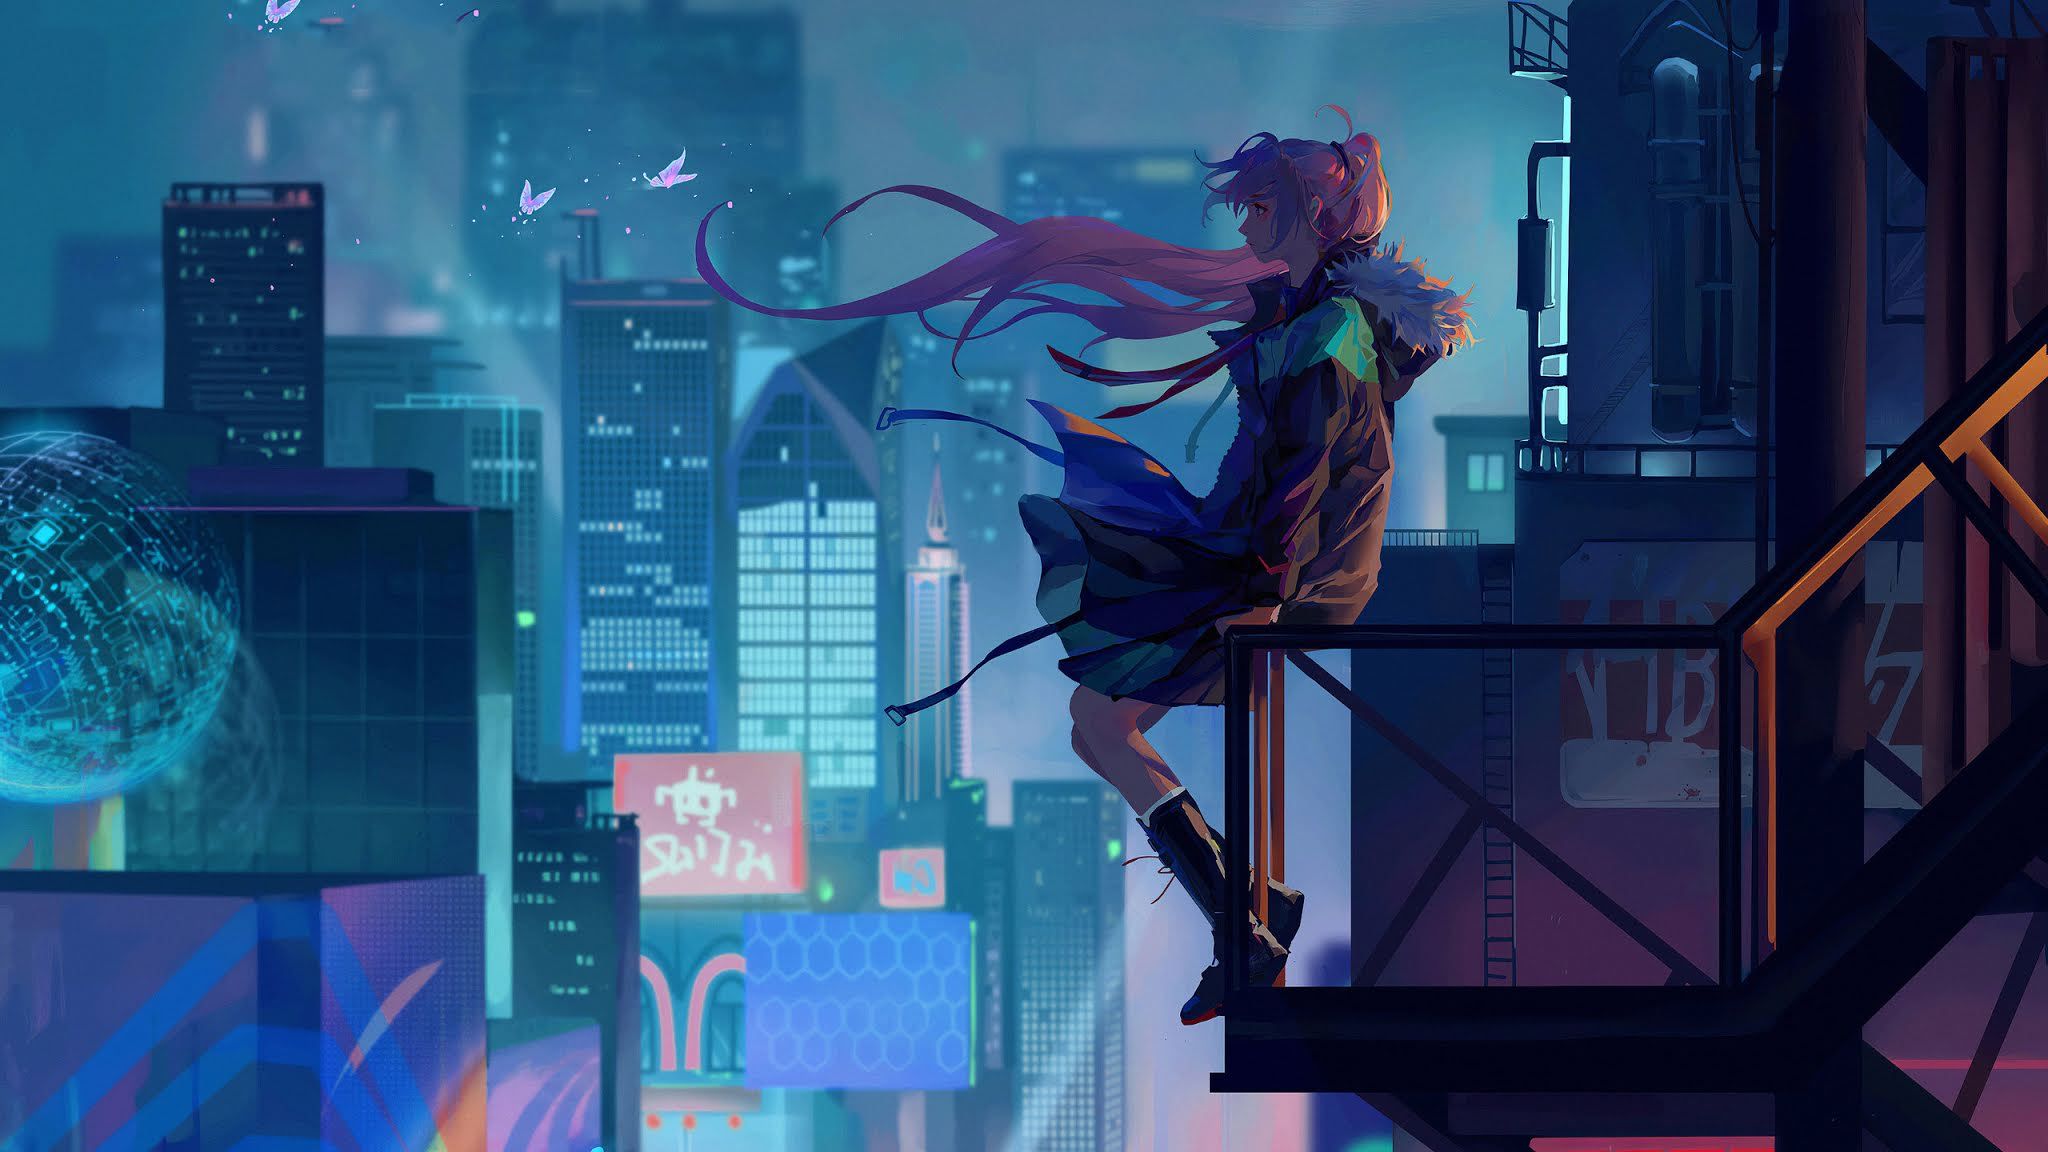 Anime Anime Girls Night Futuristic City Butterflies Blue Cyan Wallpaper:2048x1152